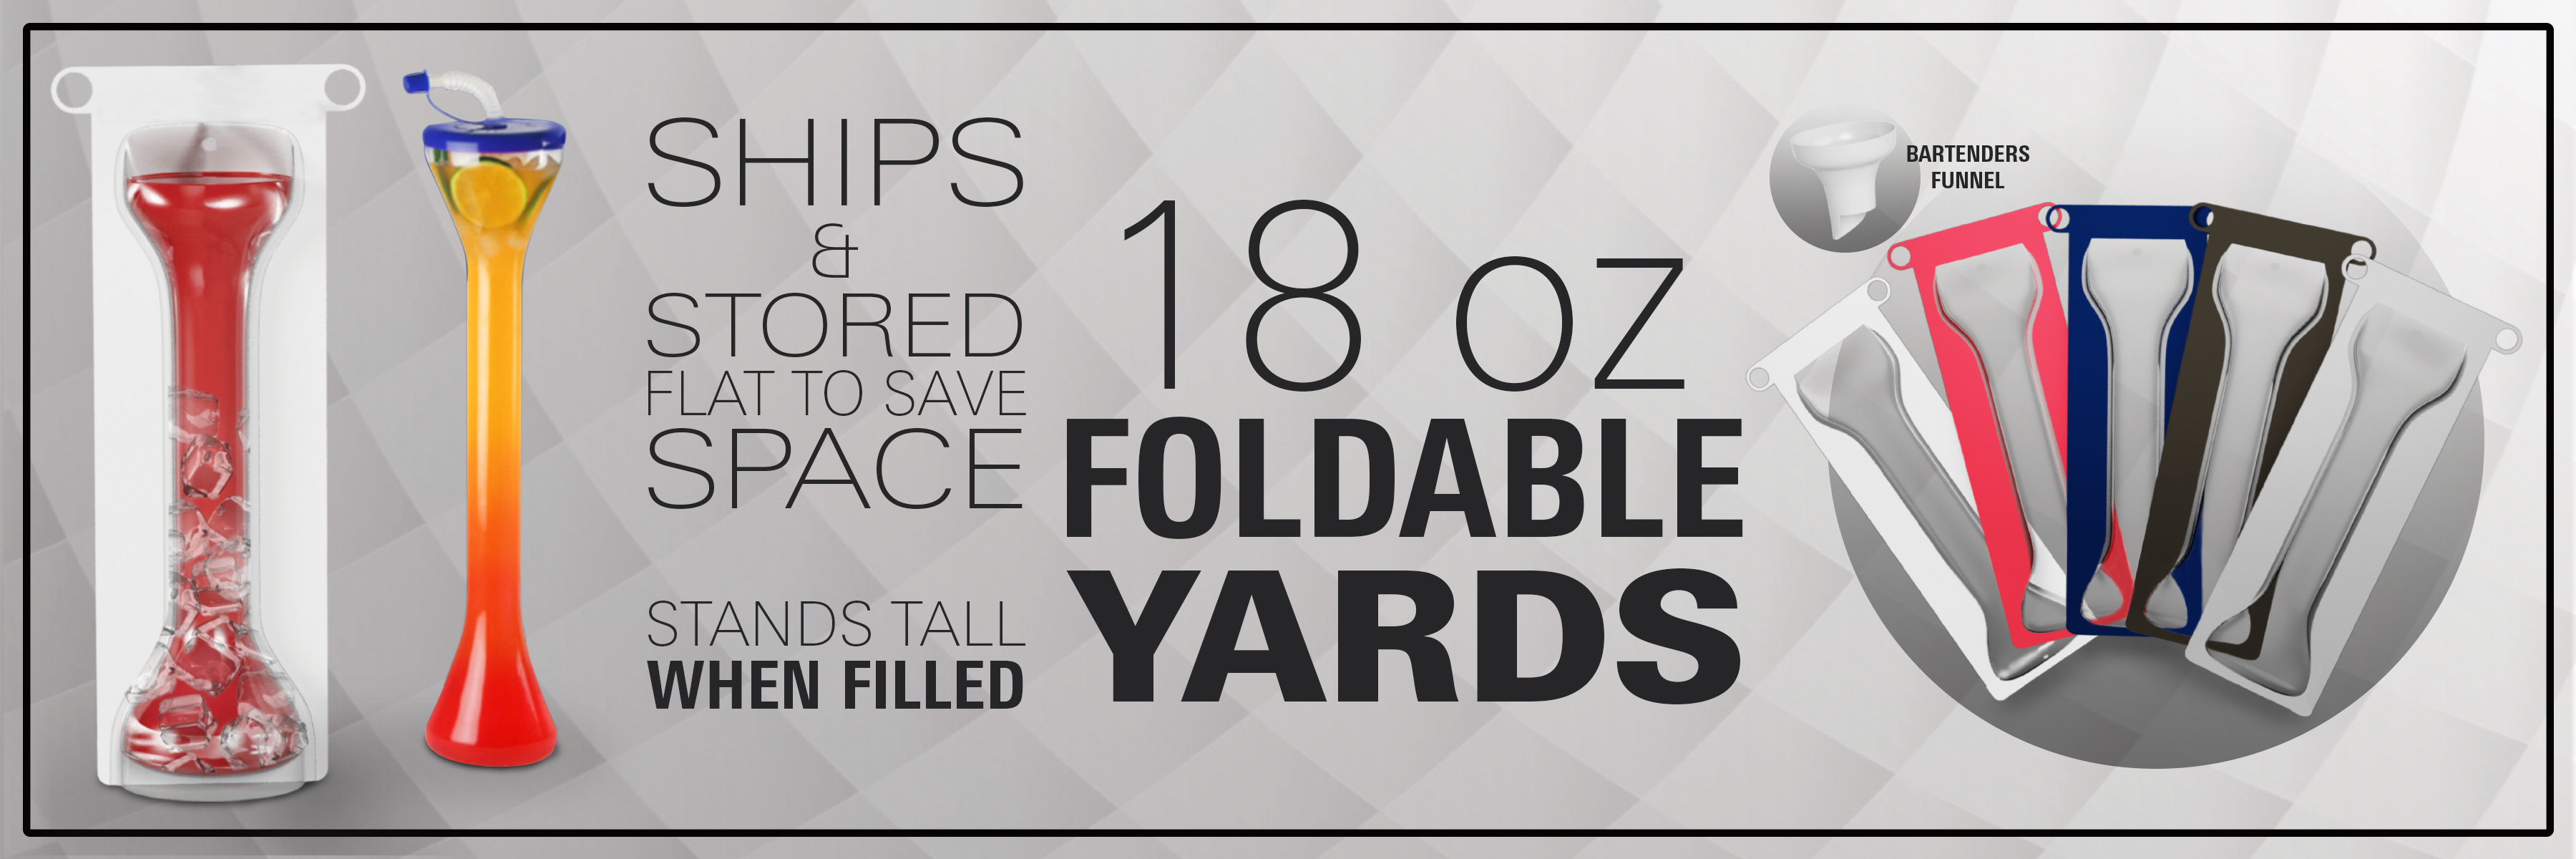 foldable yard banner